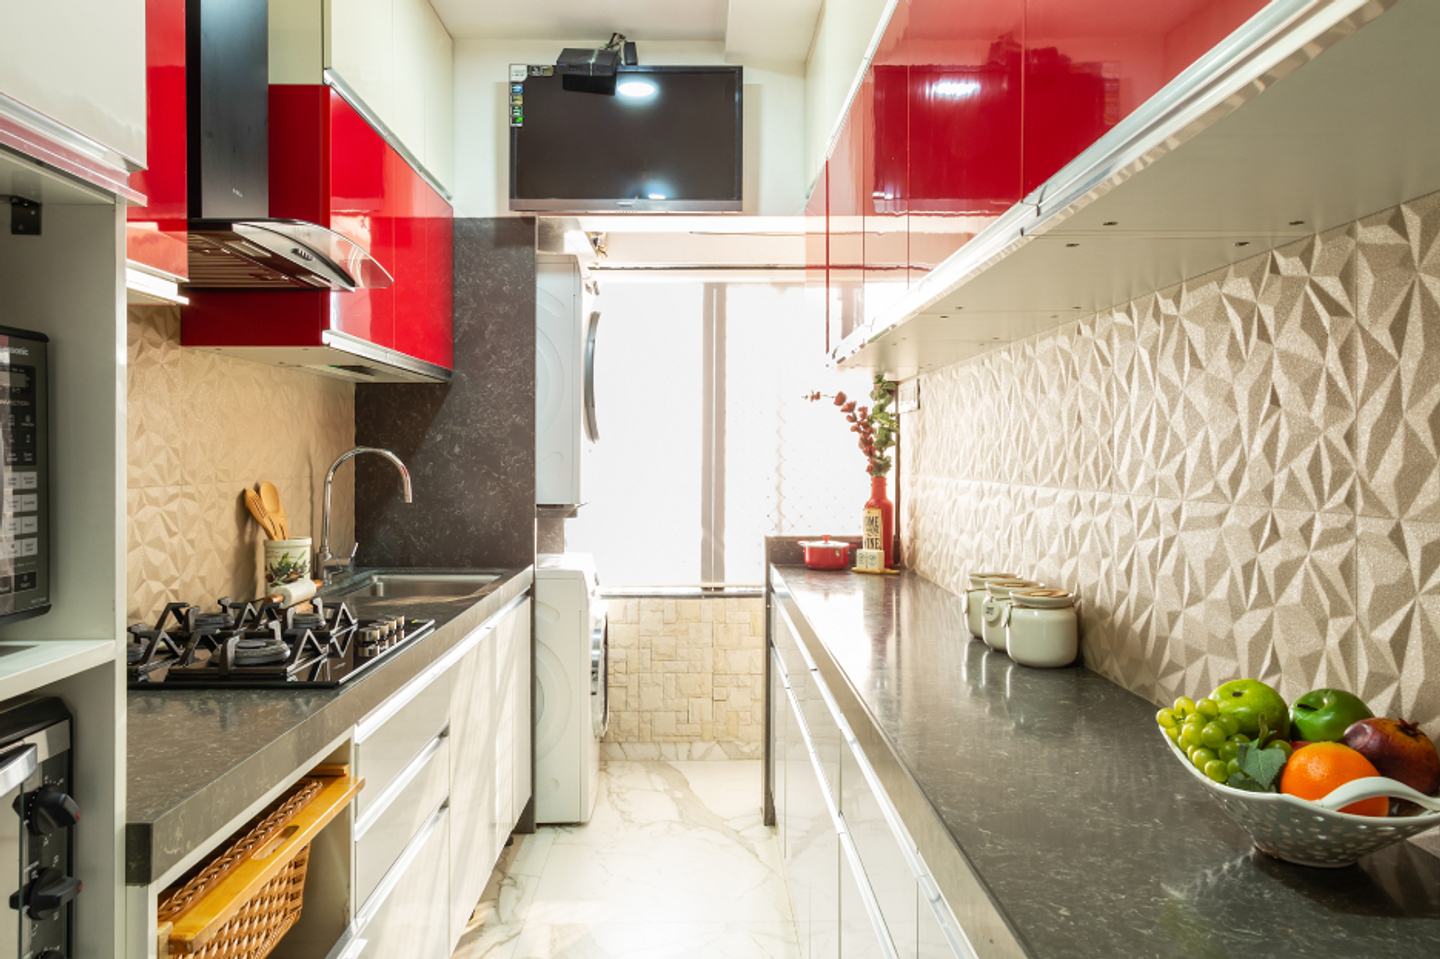 Modern Parallel Kitchen Design With 3D White Backsplash Tiles